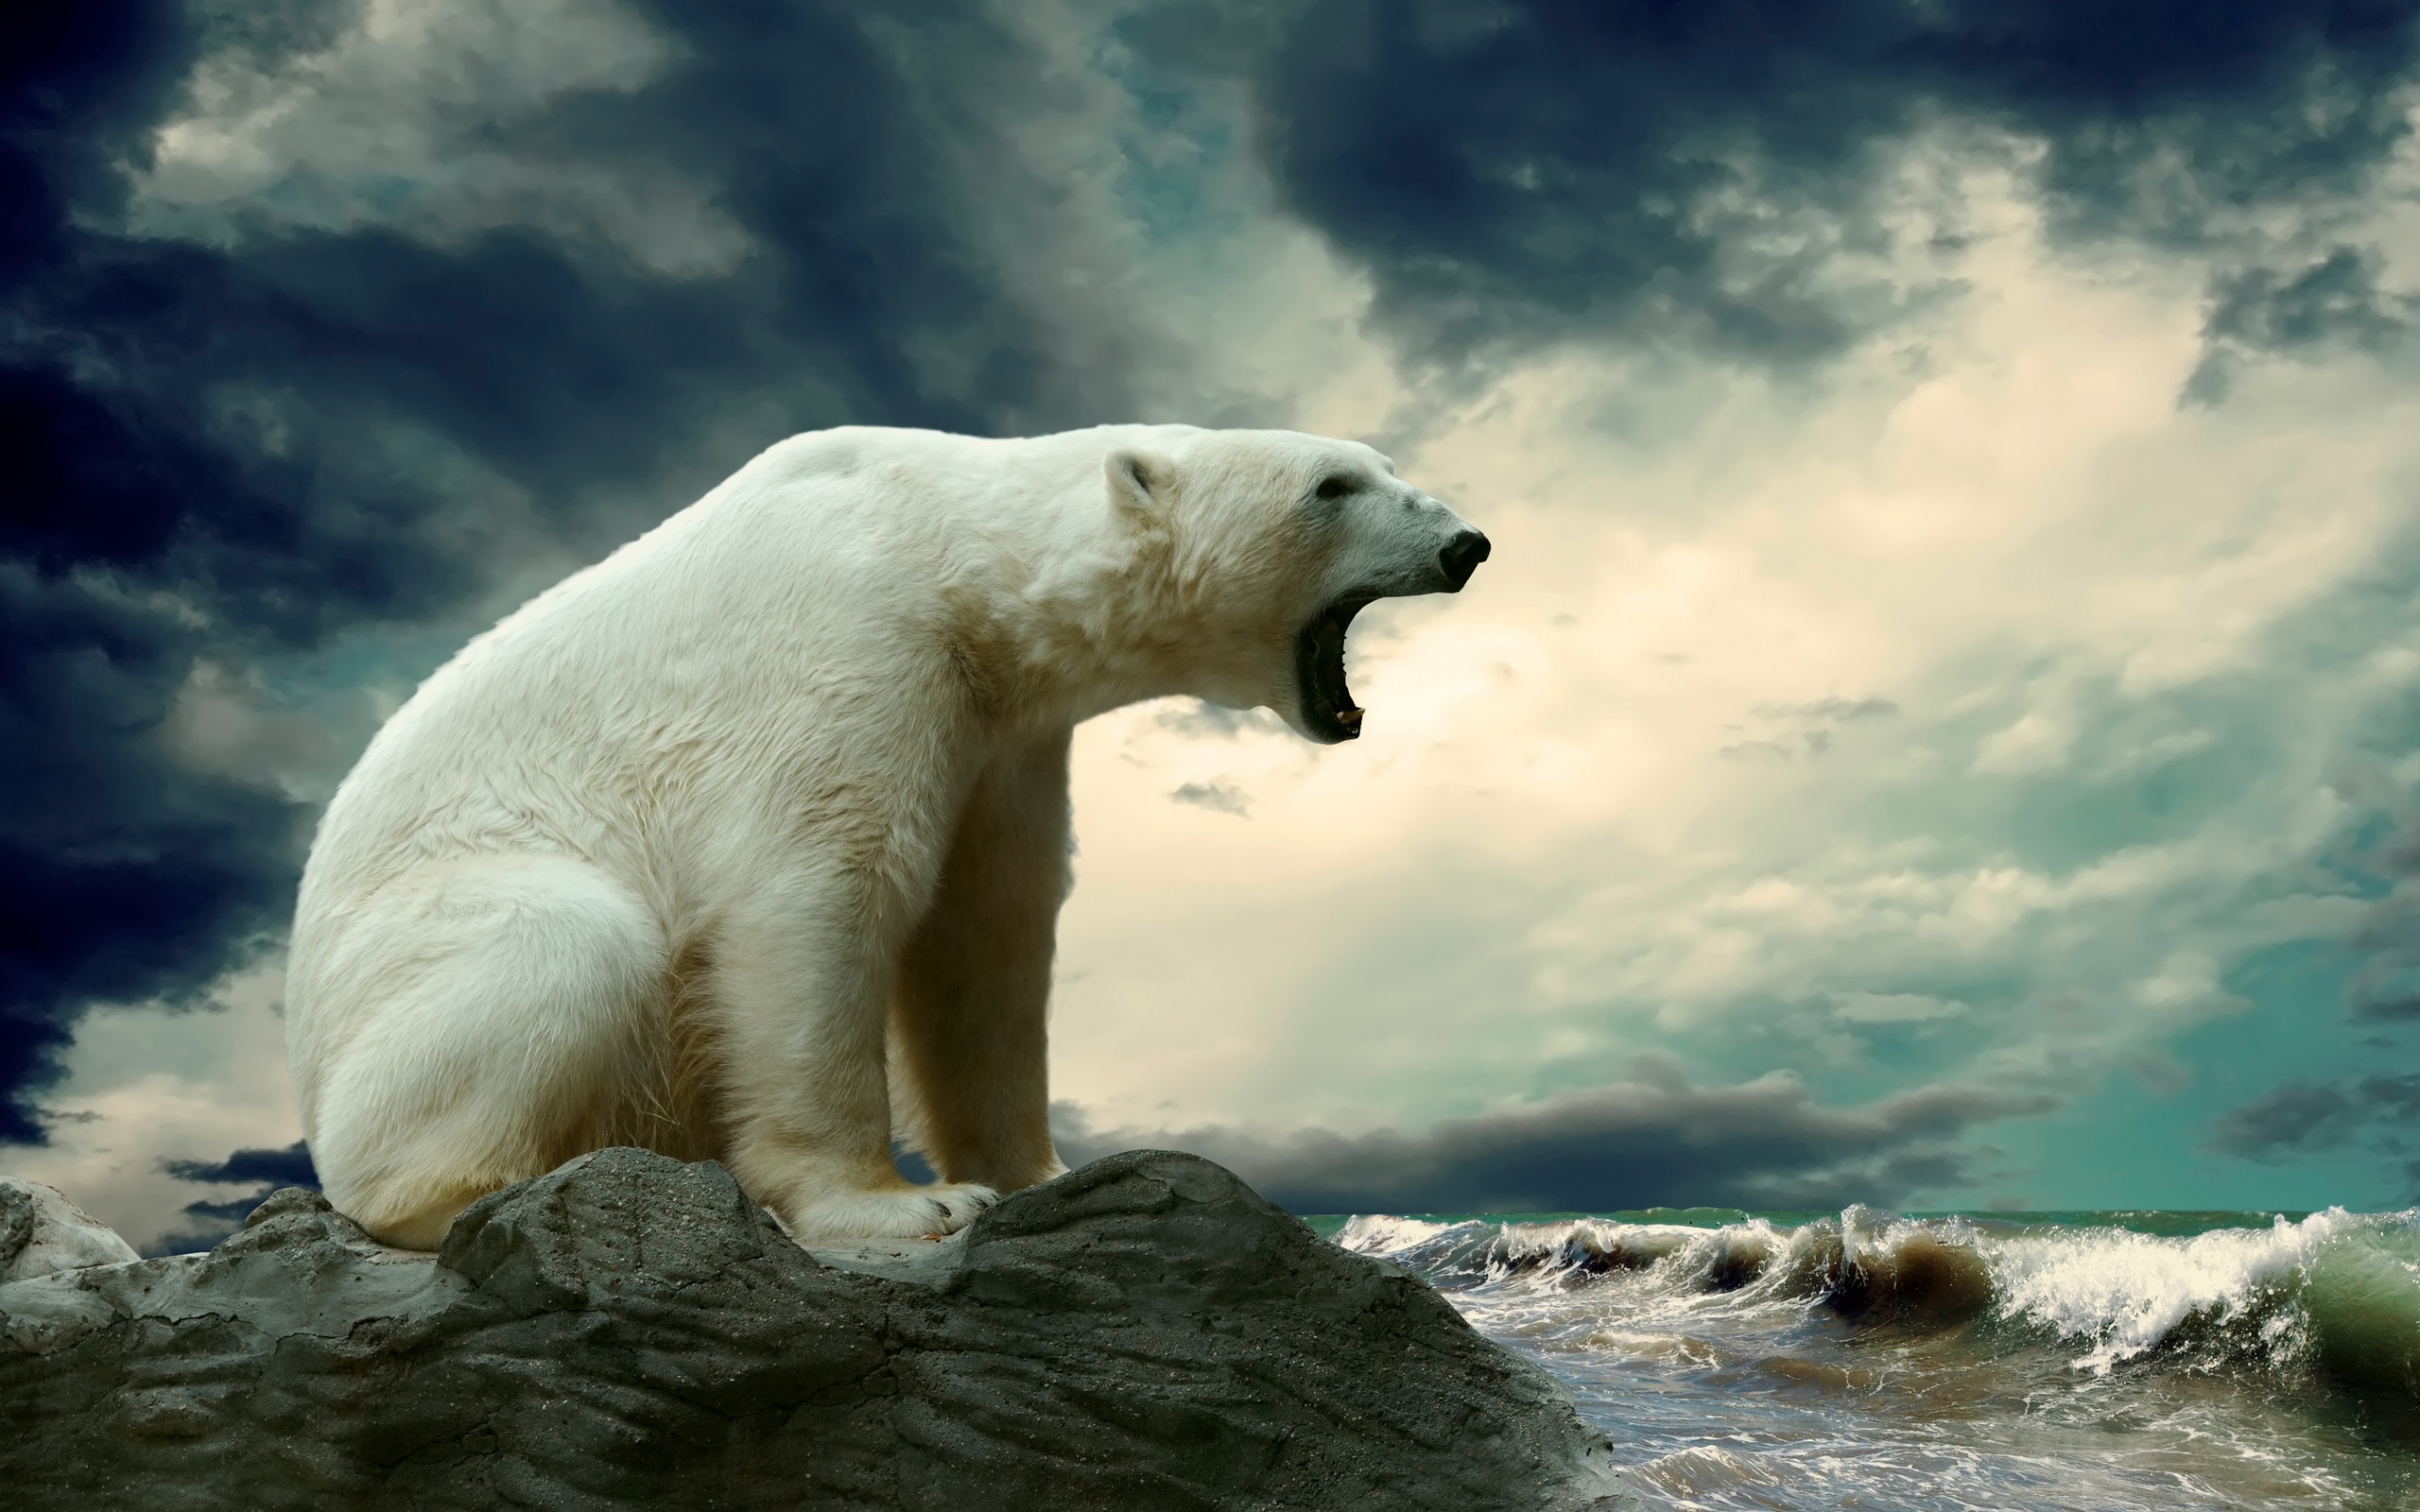 The polar bear is sitting on a rock